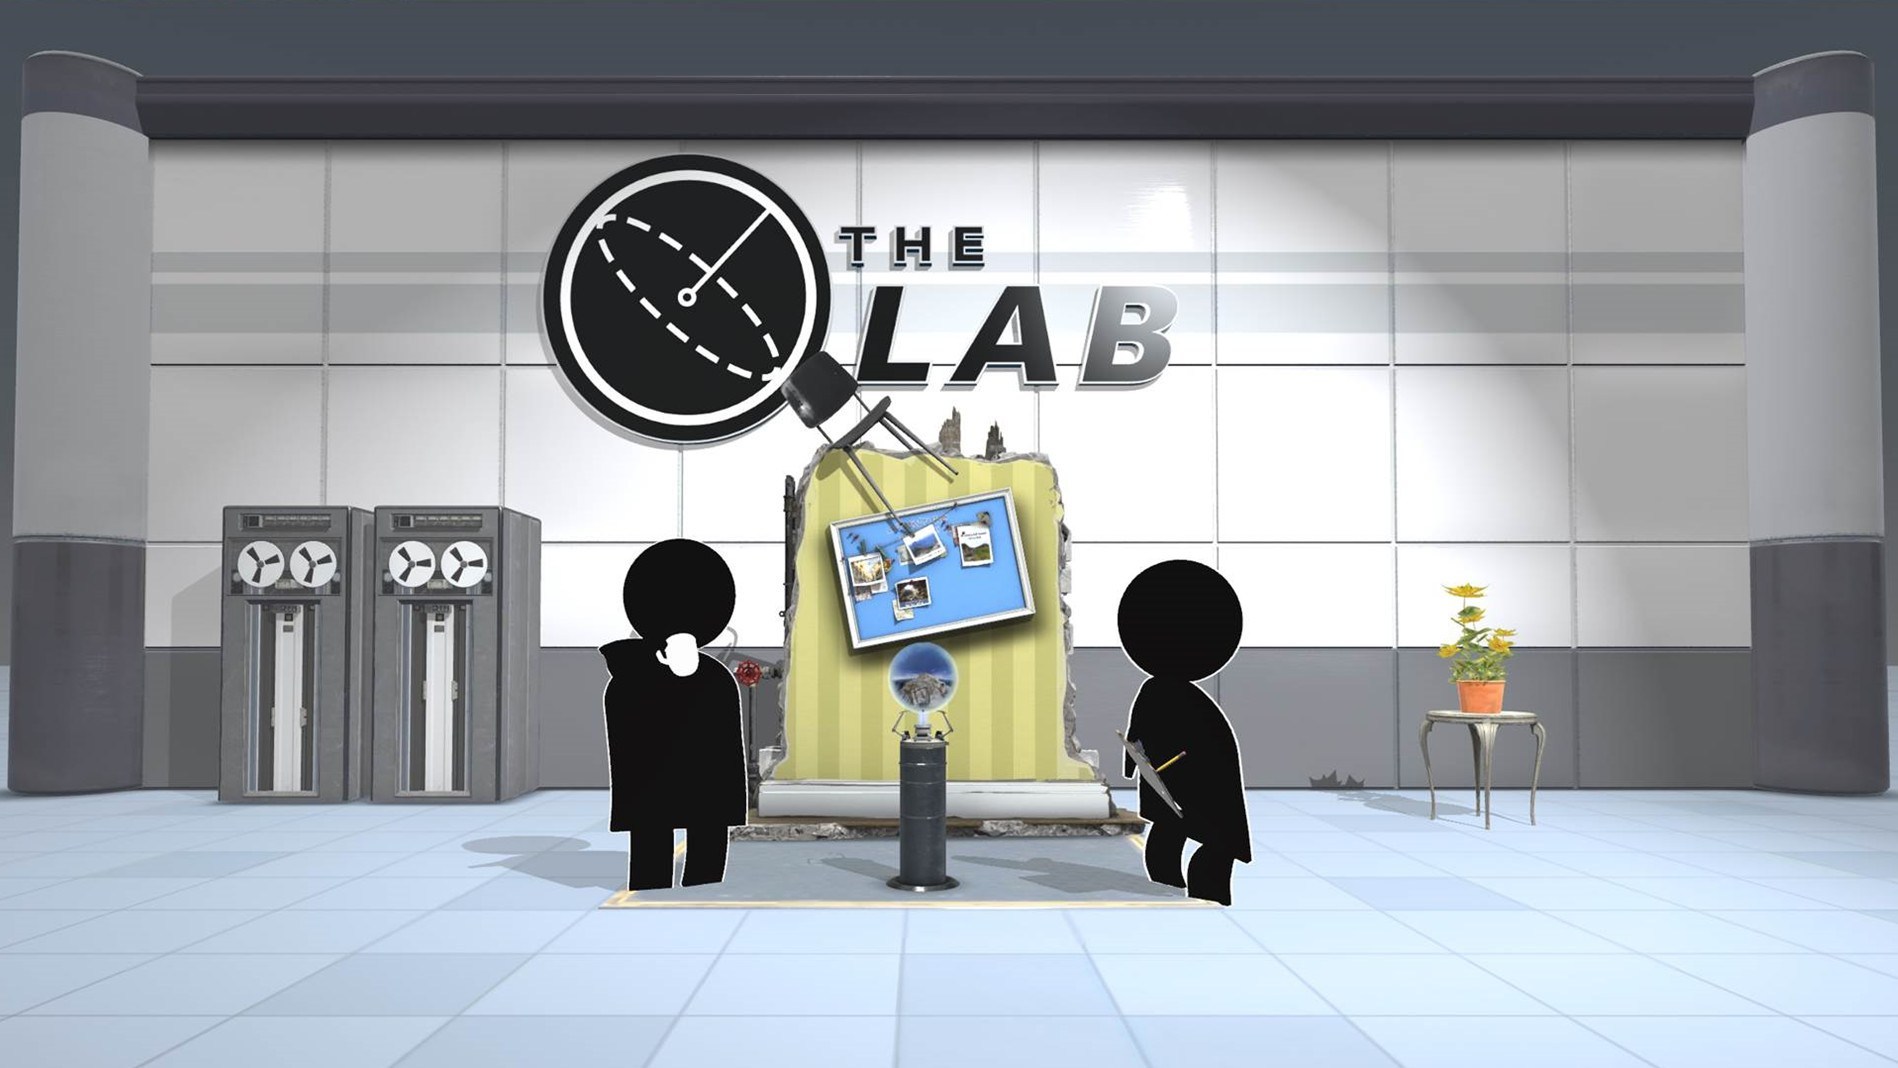 download free the lab restaurant